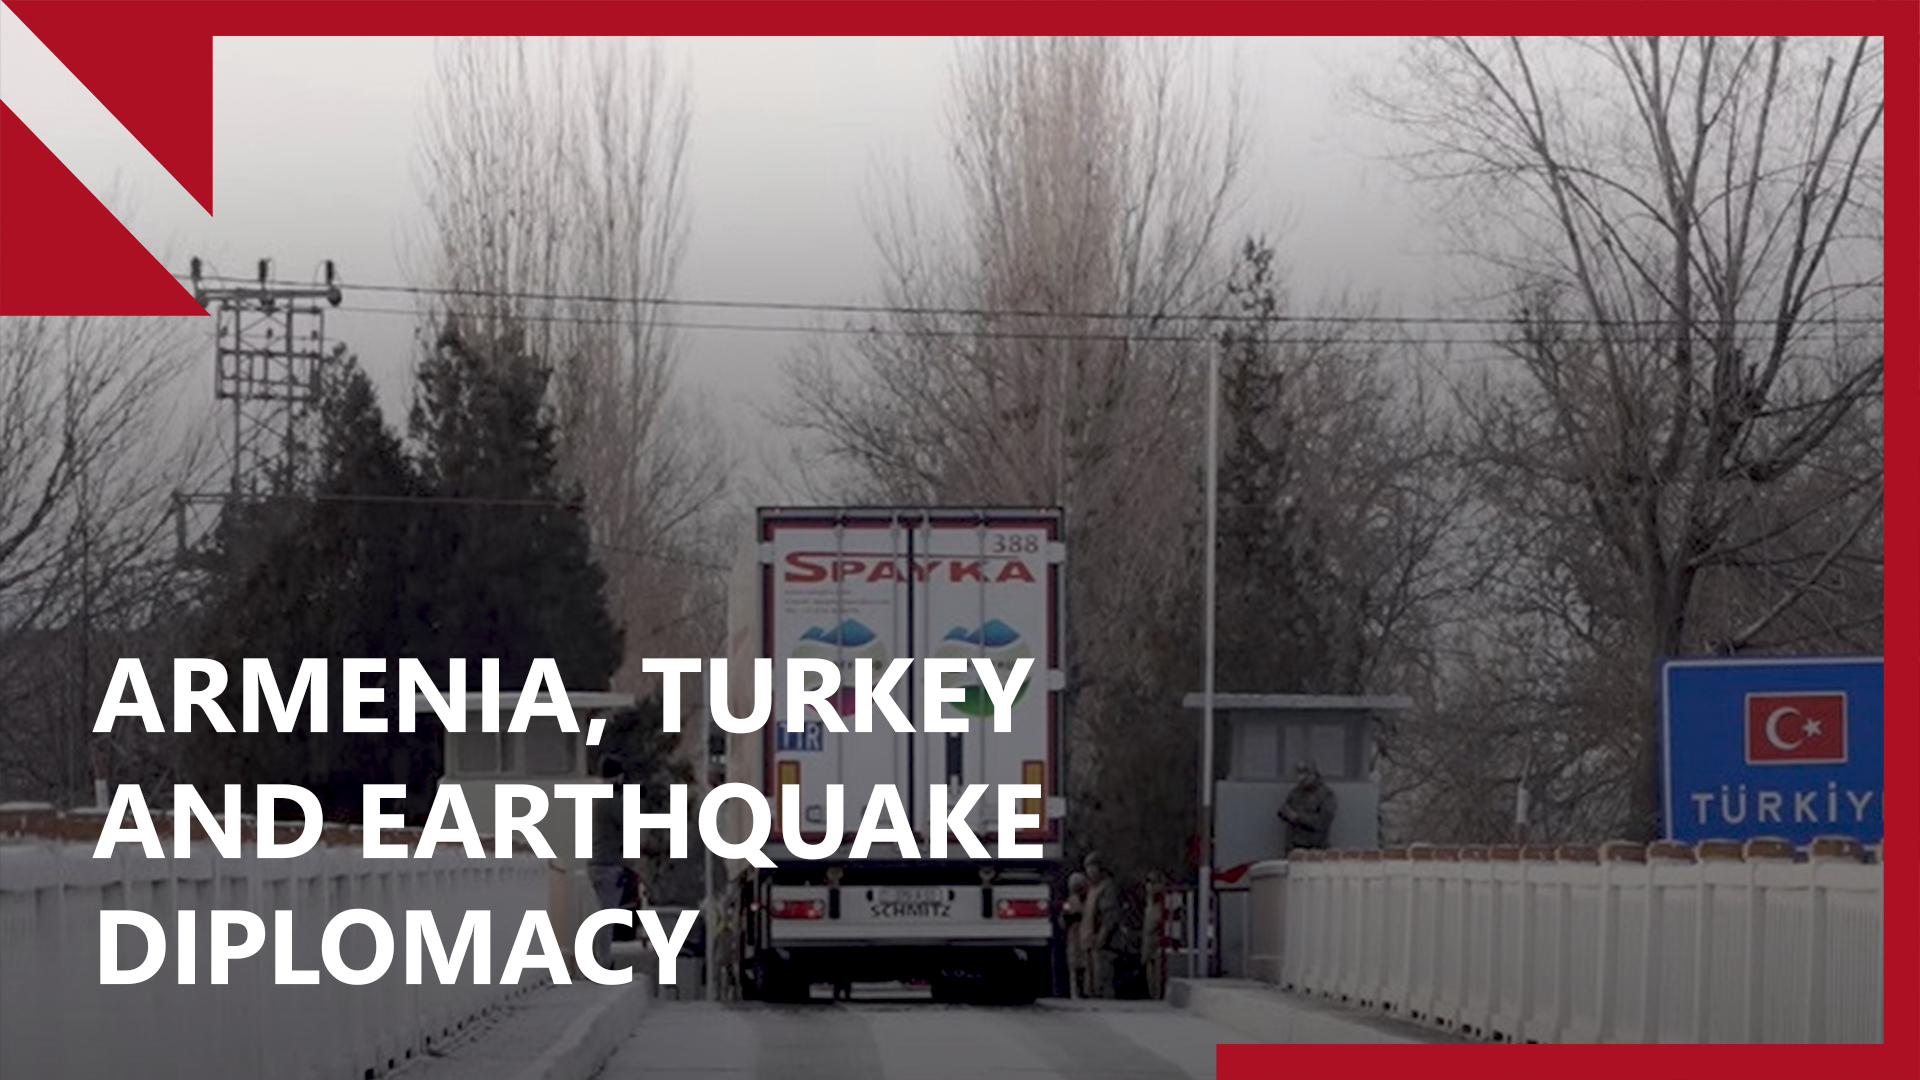 ‘Earthquake diplomacy’ heightens momentum for Armenia-Turkey normalization